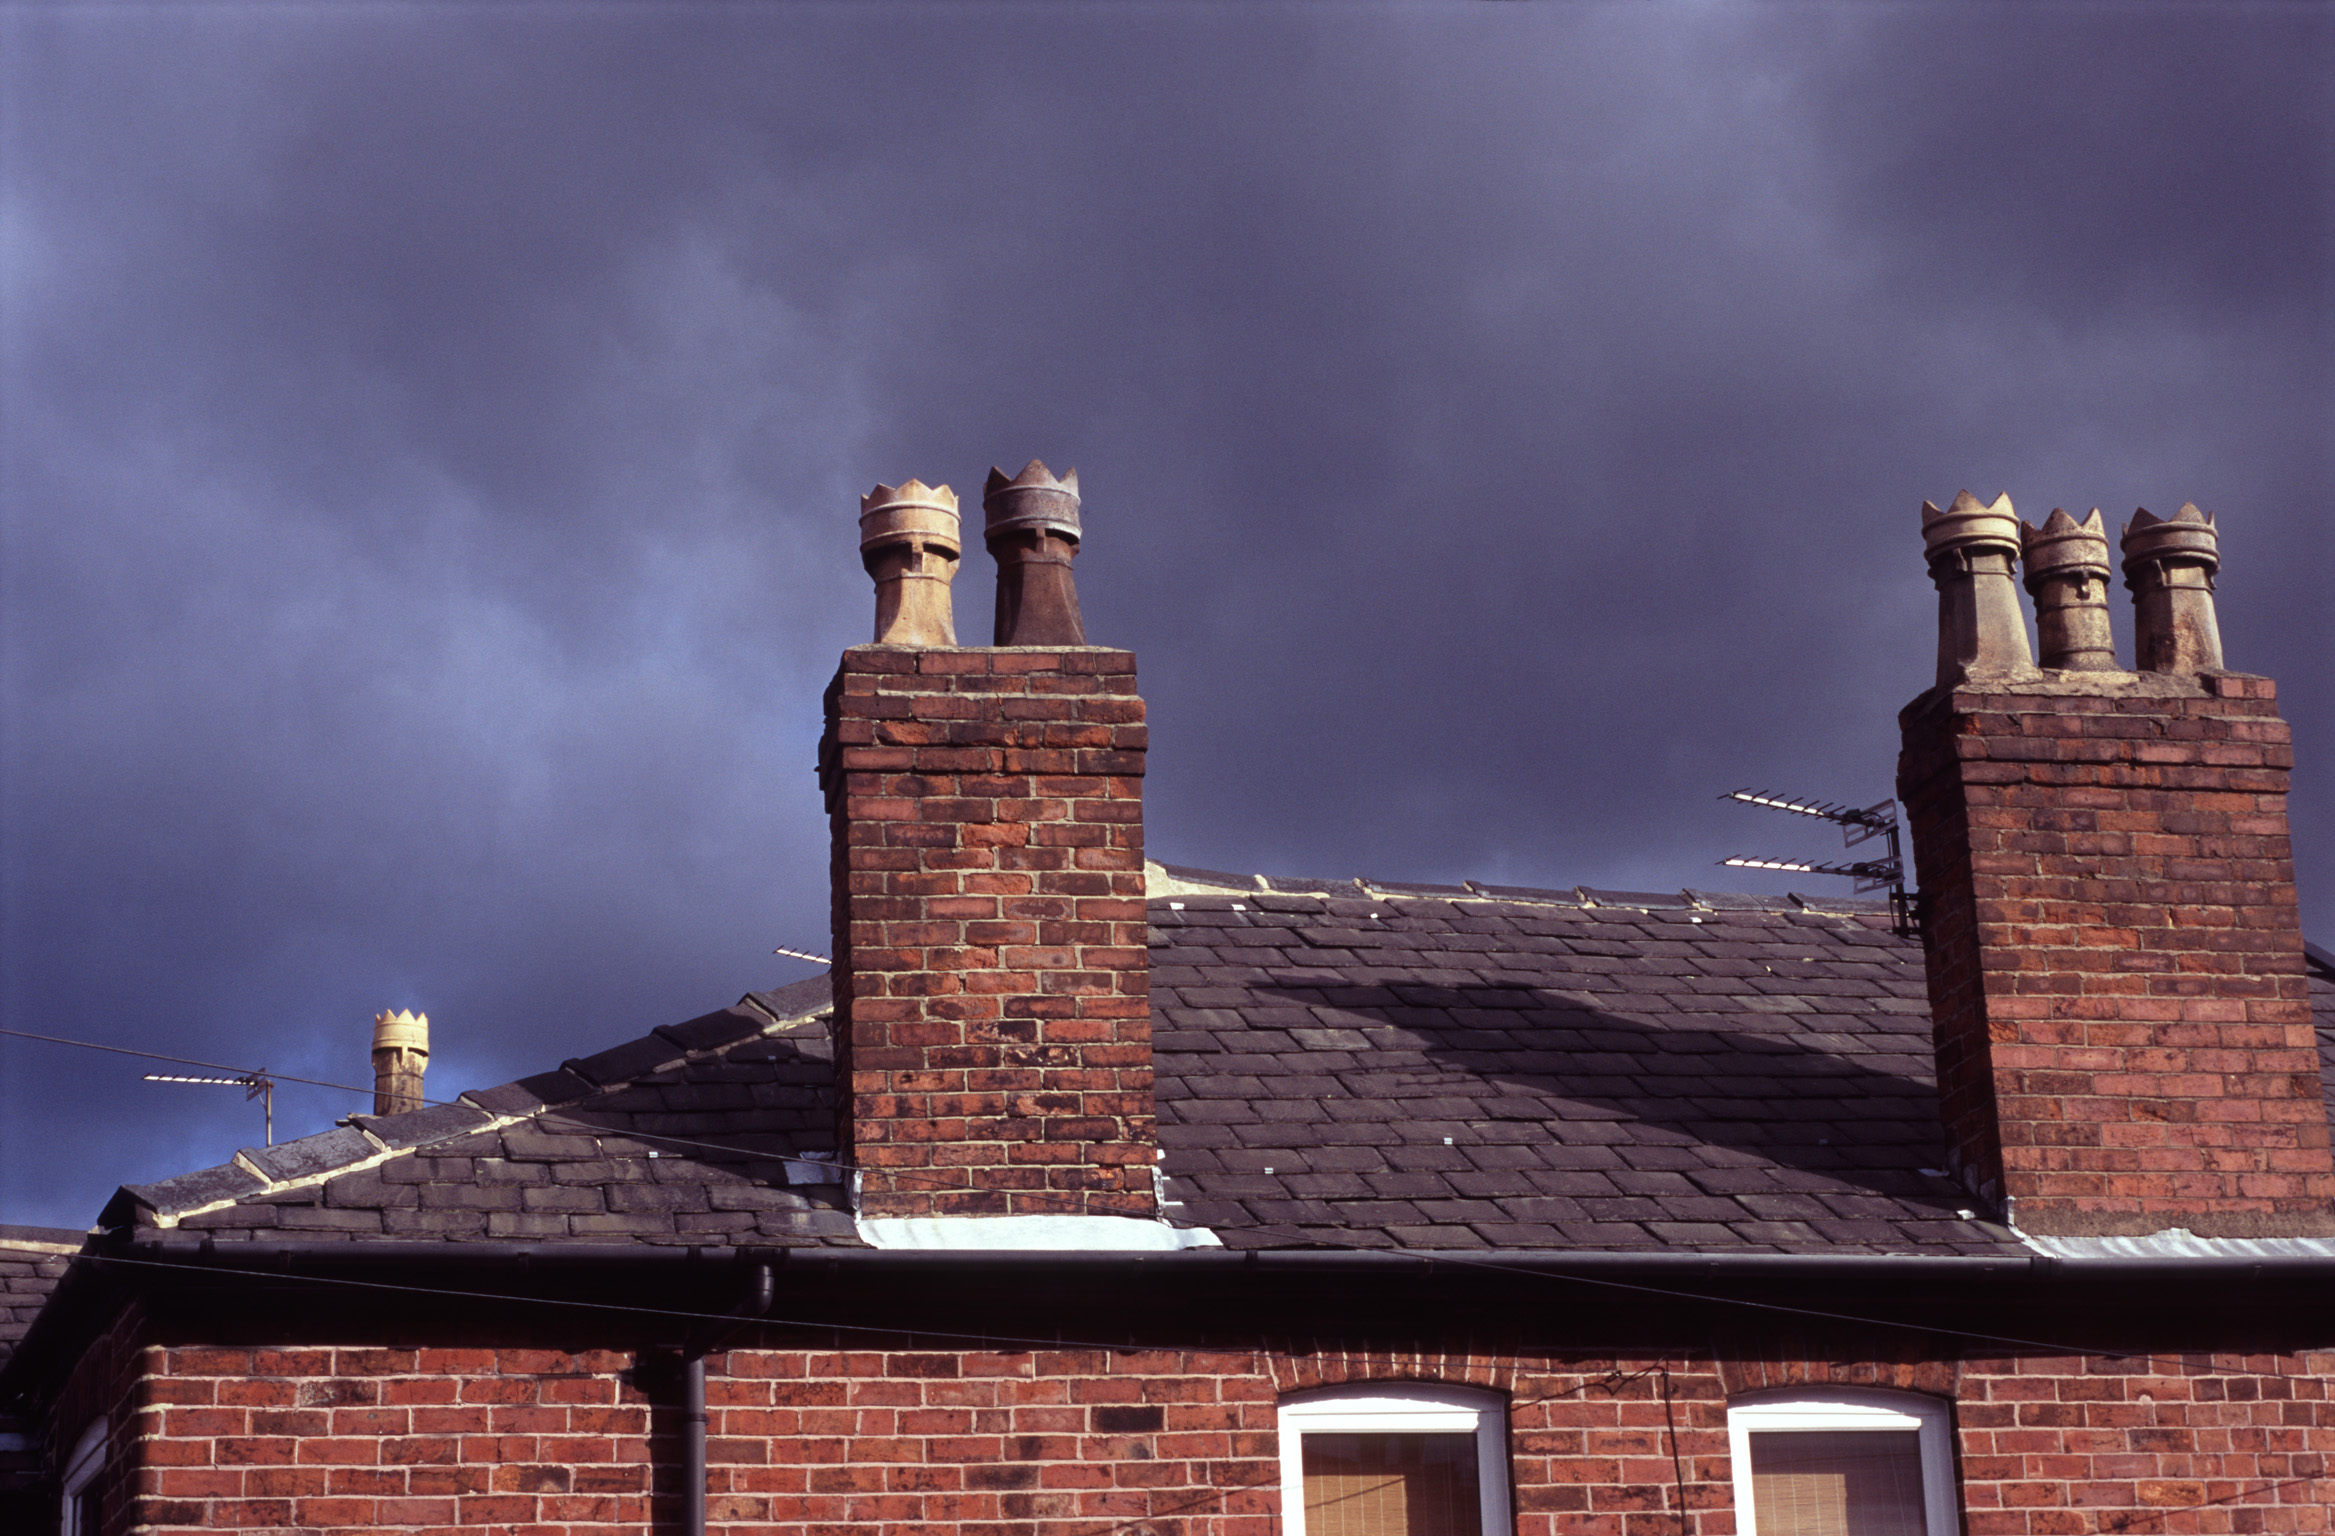 Free Stock photo of Red brick chimney pots | Photoeverywhere